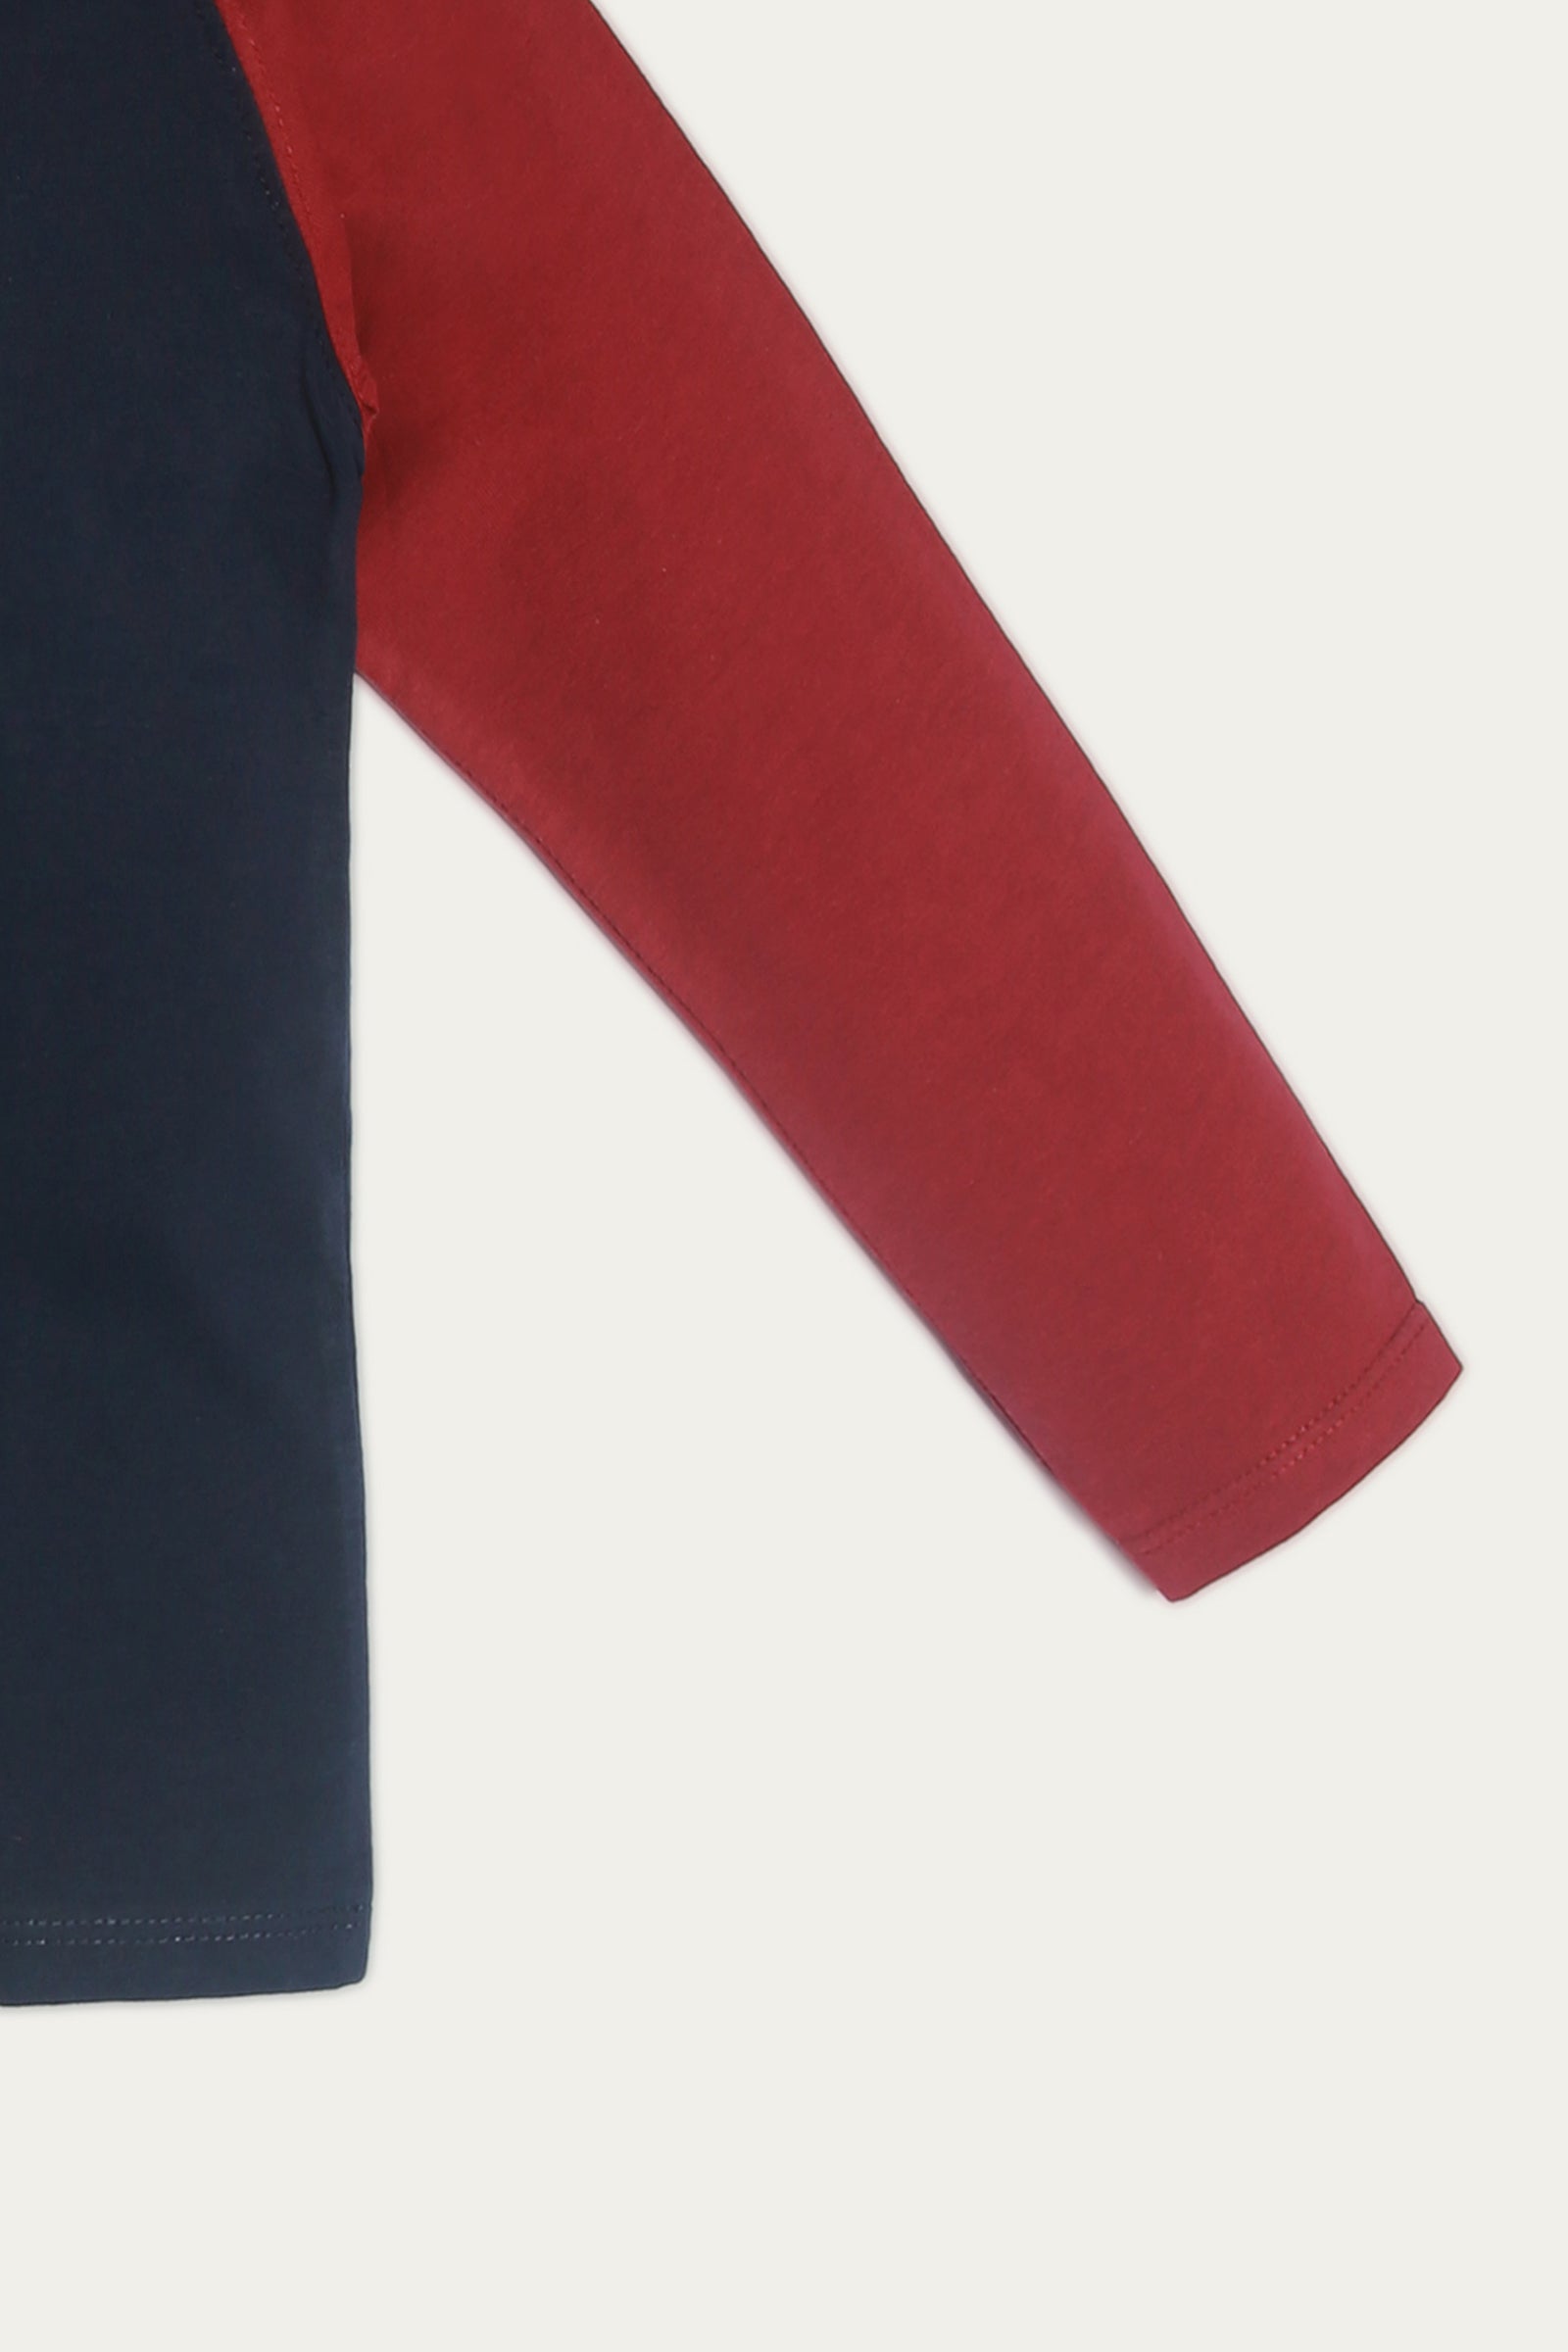 Long Sleeve Raglan shirt (MSBBR-05)